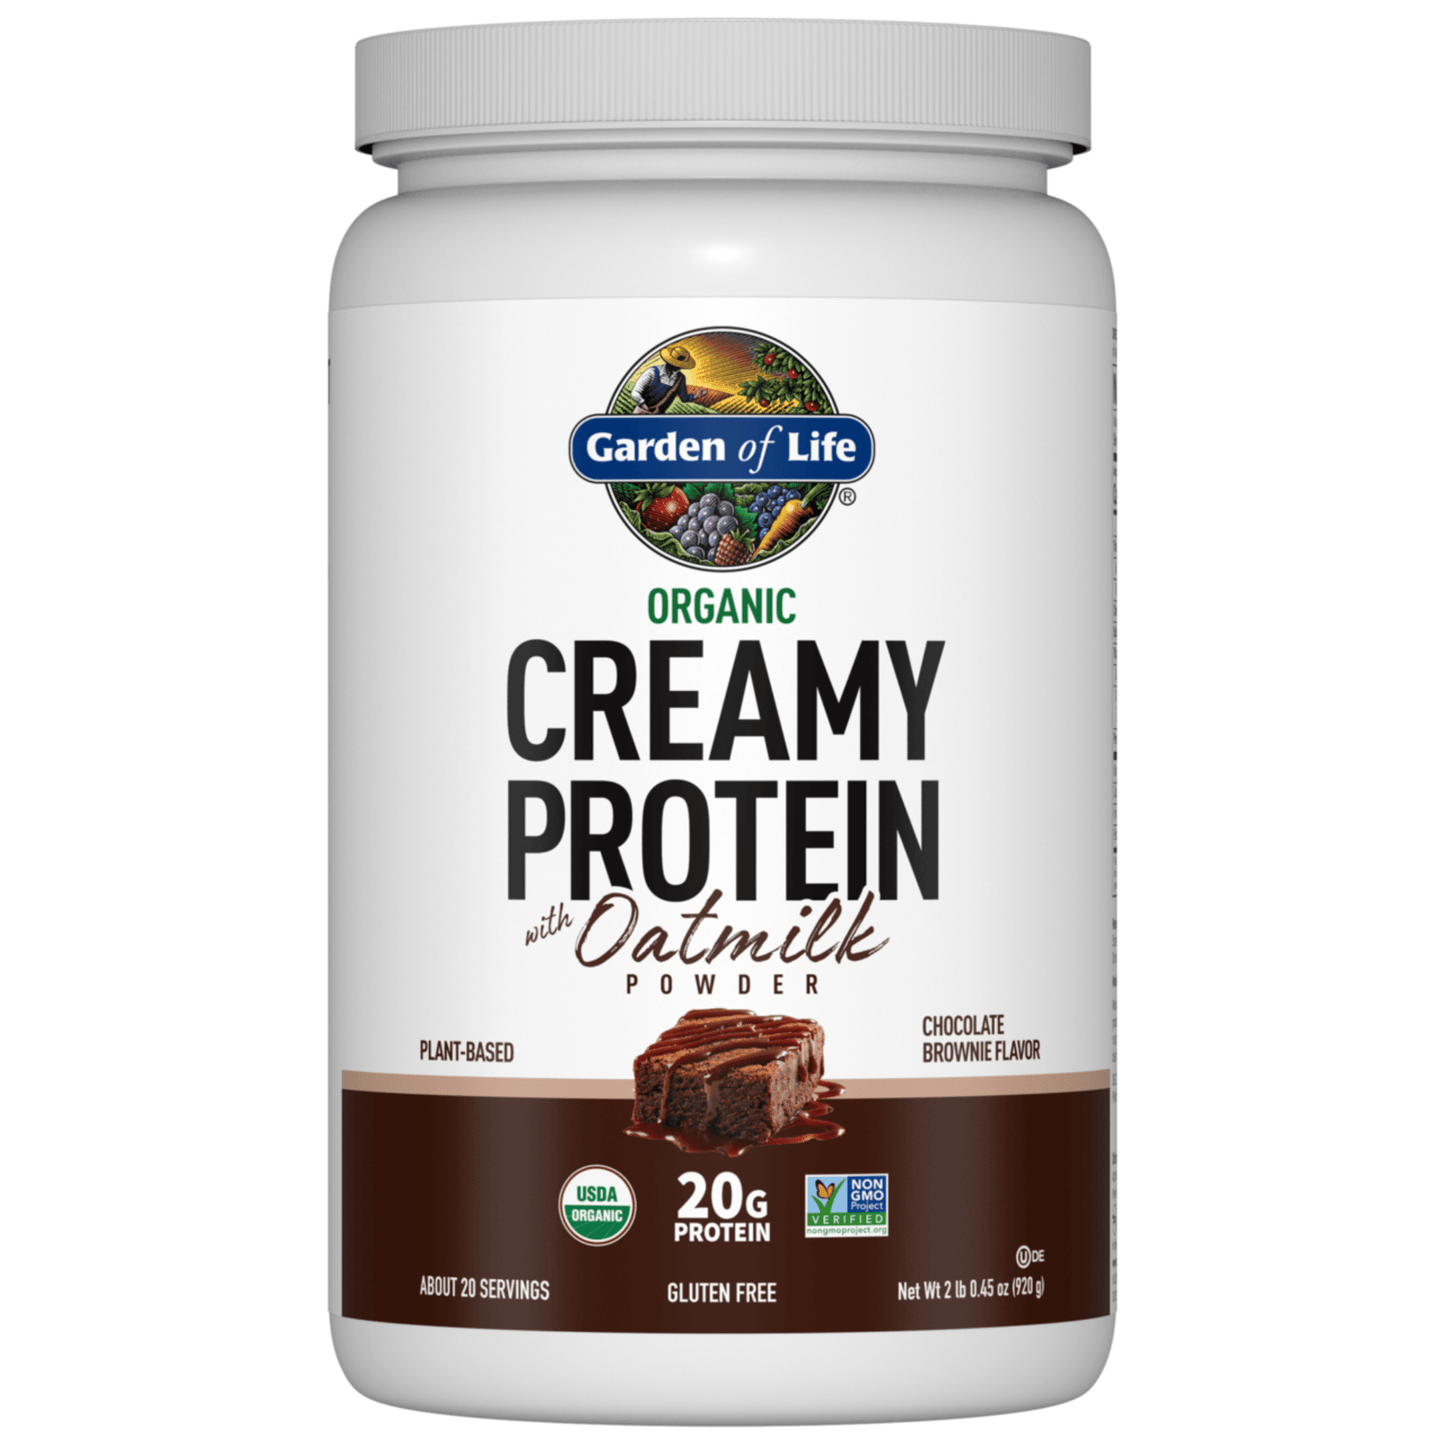 Primary Image of Organic Creamy Protein Powder Chocolate